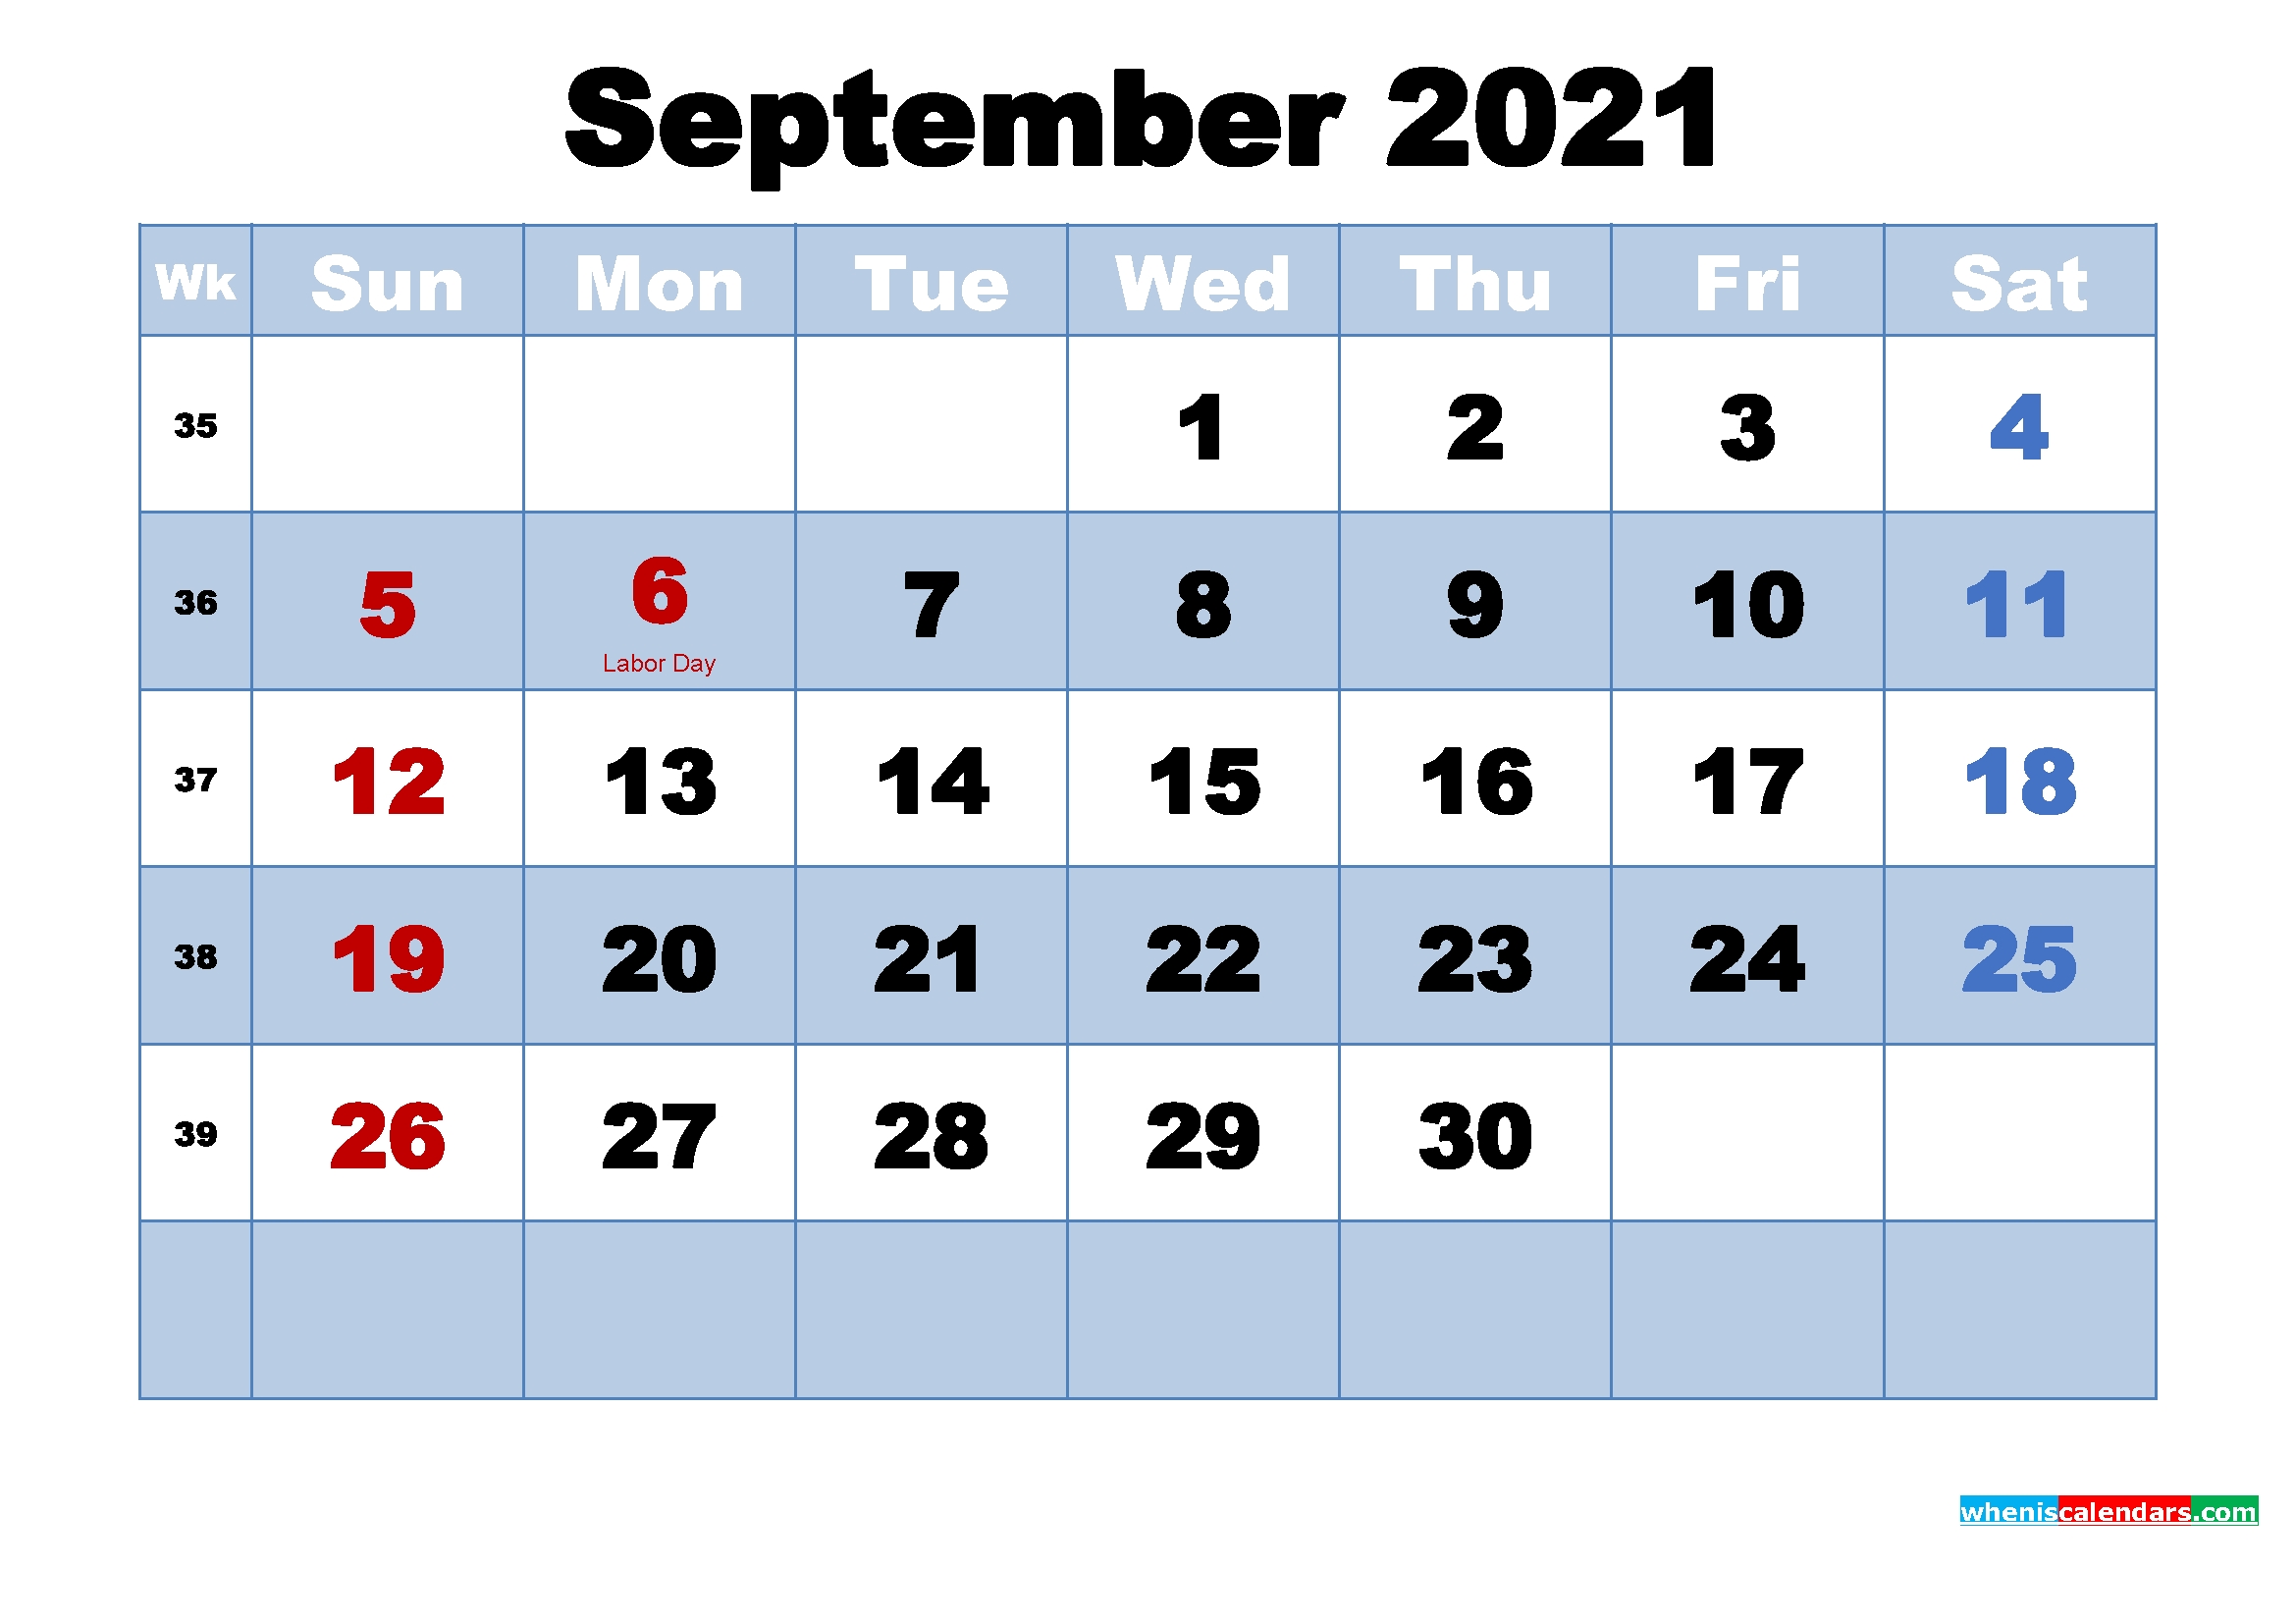 September 2021 Calendar With Holidays Printable September 2021 Monthly Calendar